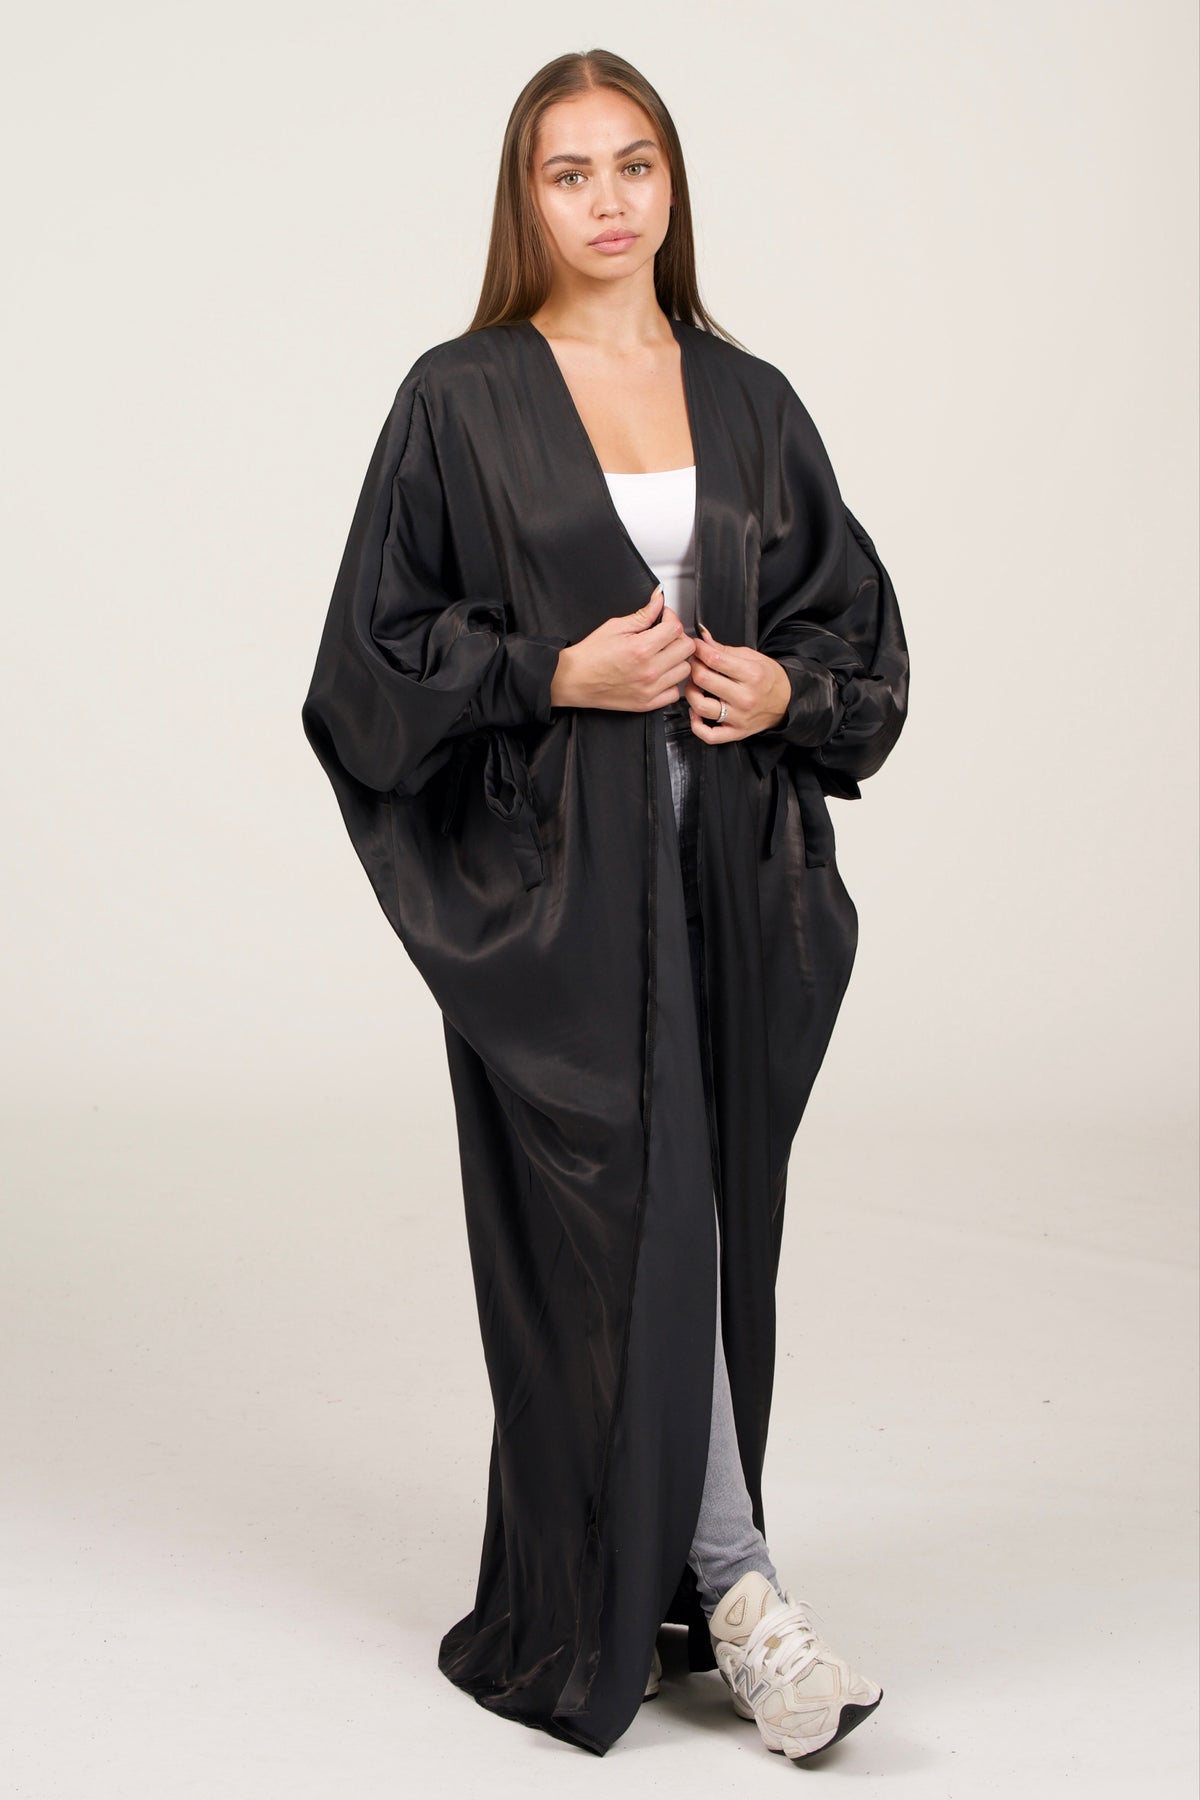 Shiny Black Kimono With Bows On The Sleeves